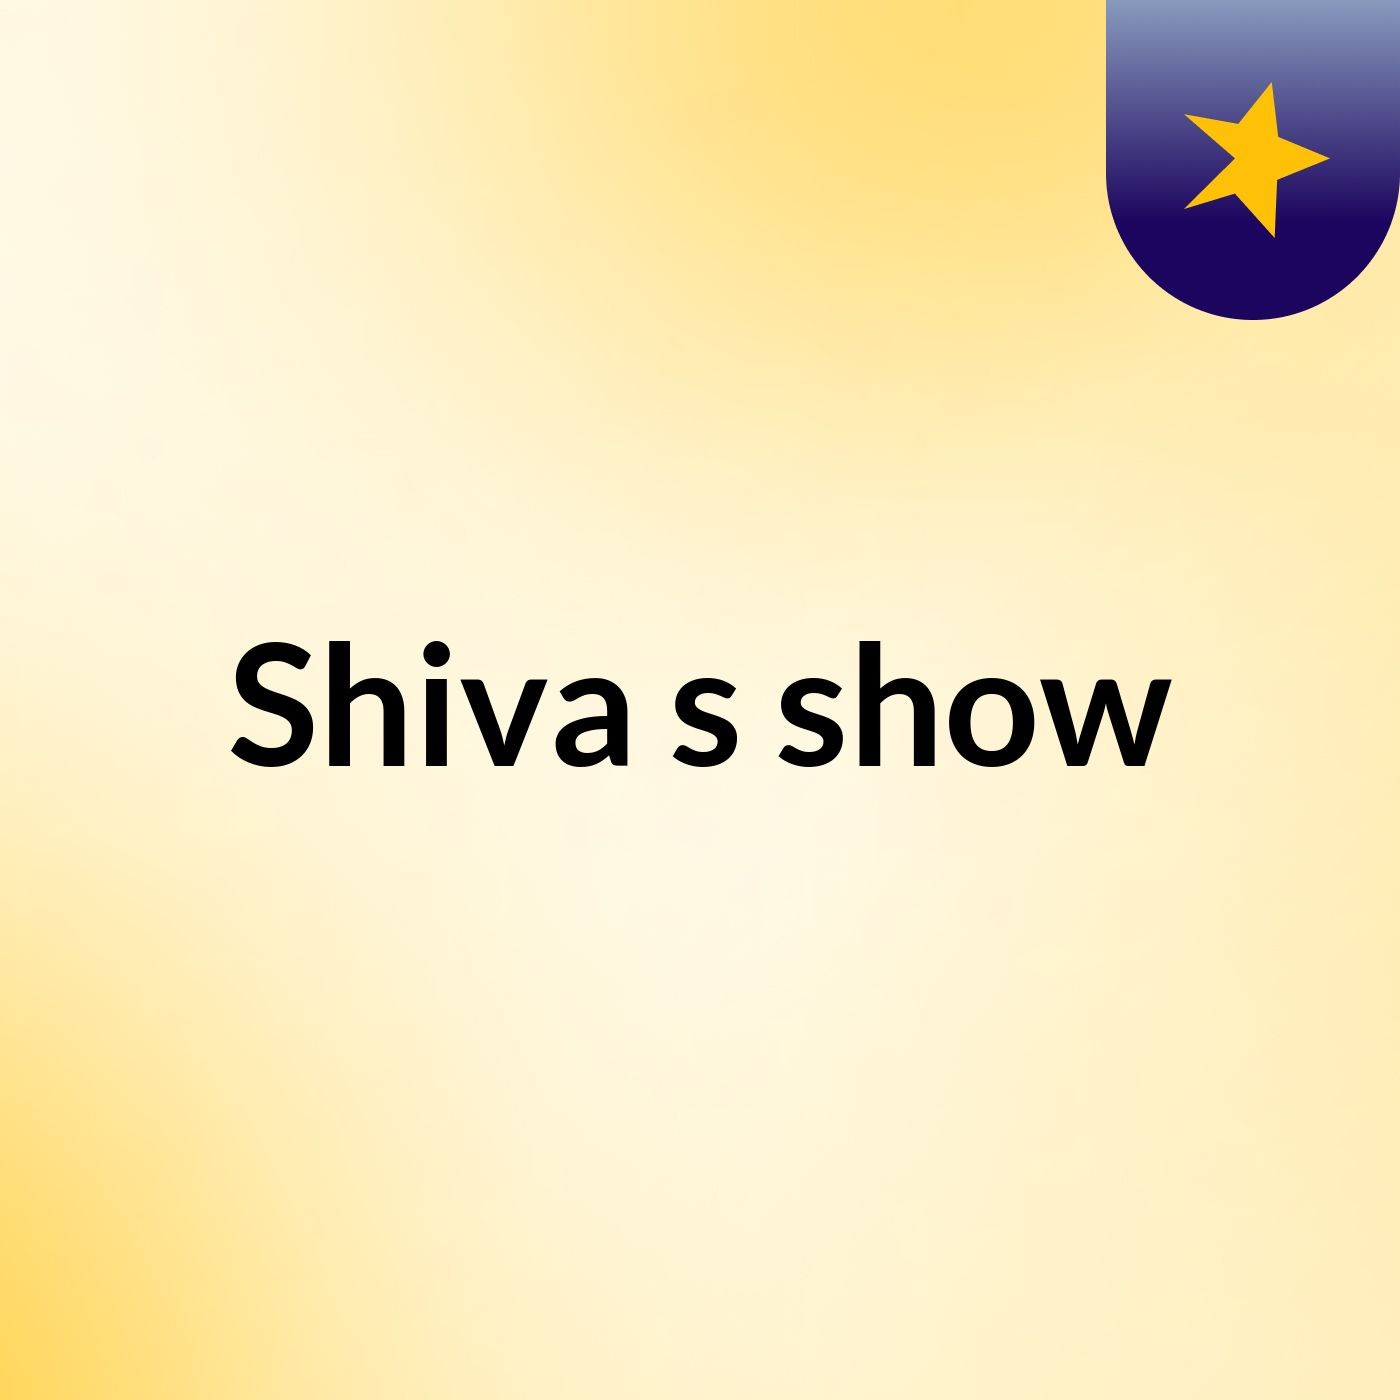 Shiva's show